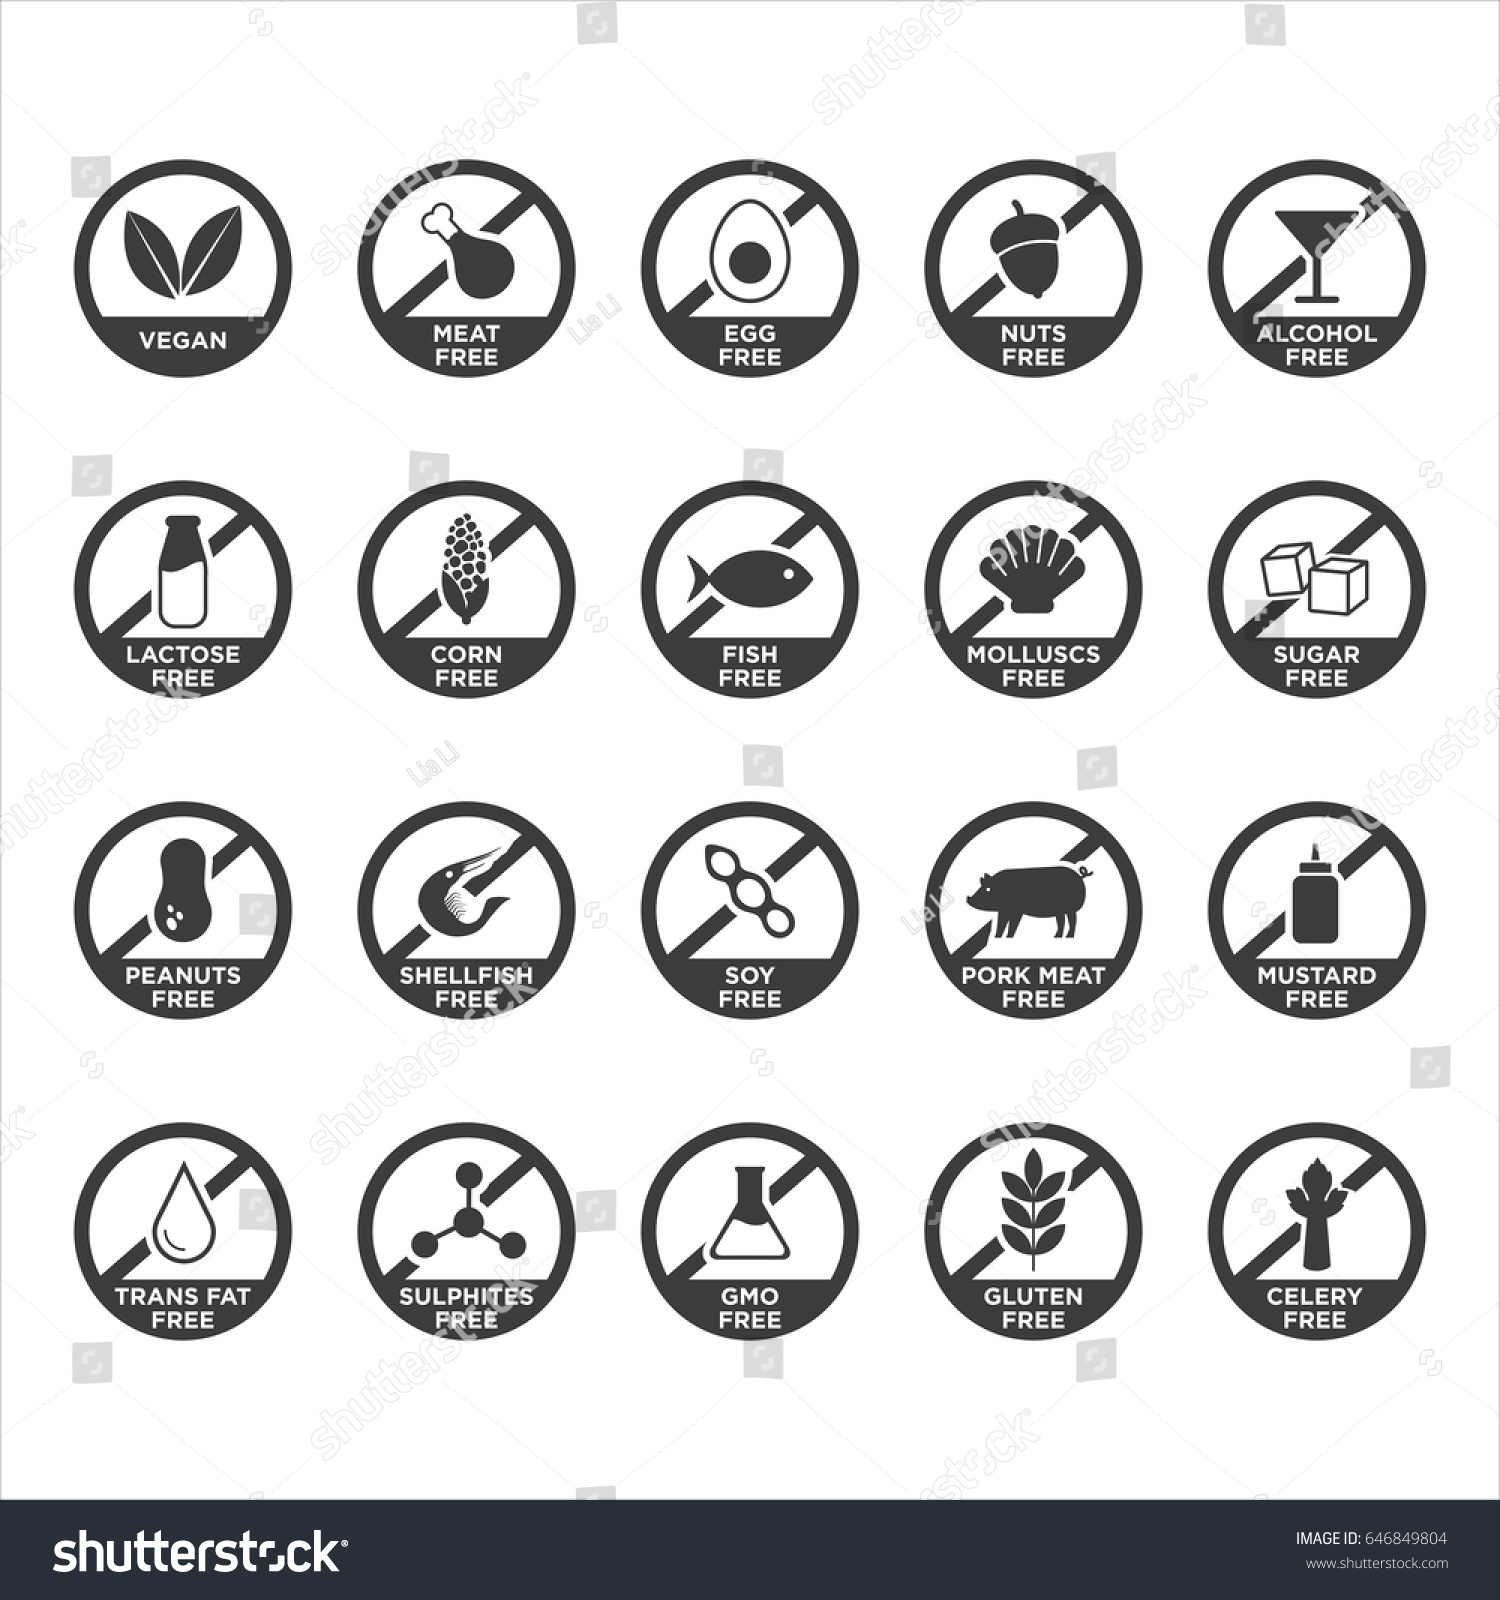 SVG of Allergen free icons set. Black and white. Vector illustration.
 svg